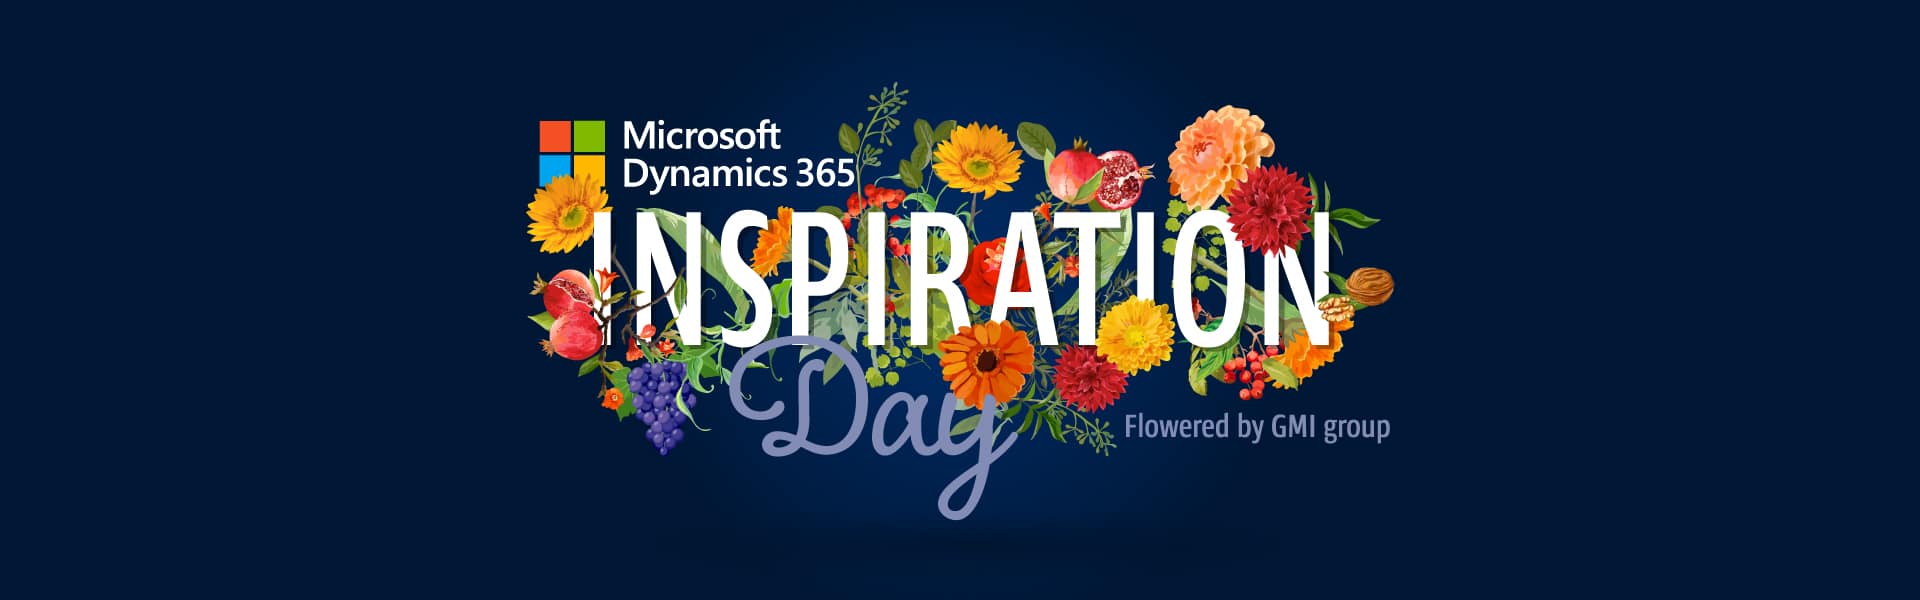 Microsoft Inspiration Day